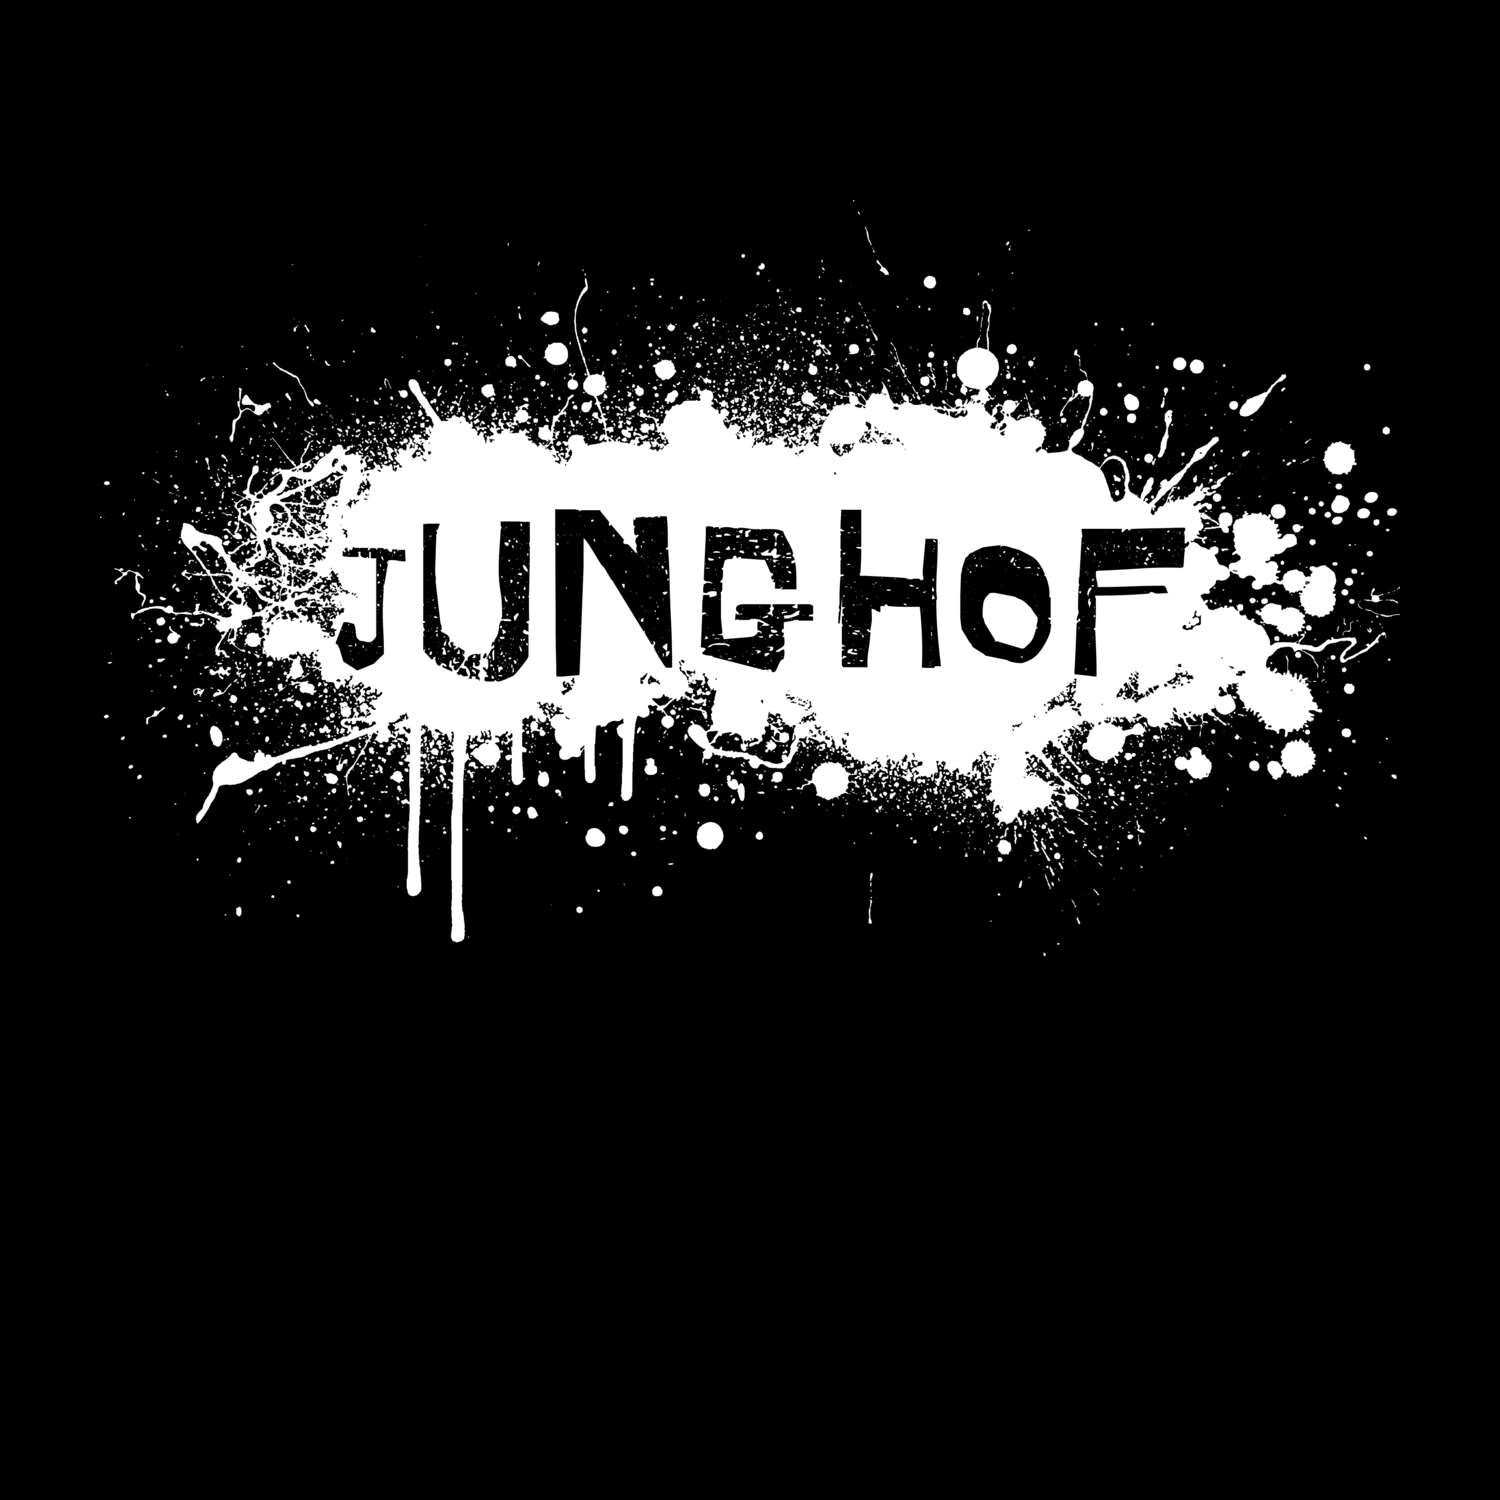 Junghof T-Shirt »Paint Splash Punk«